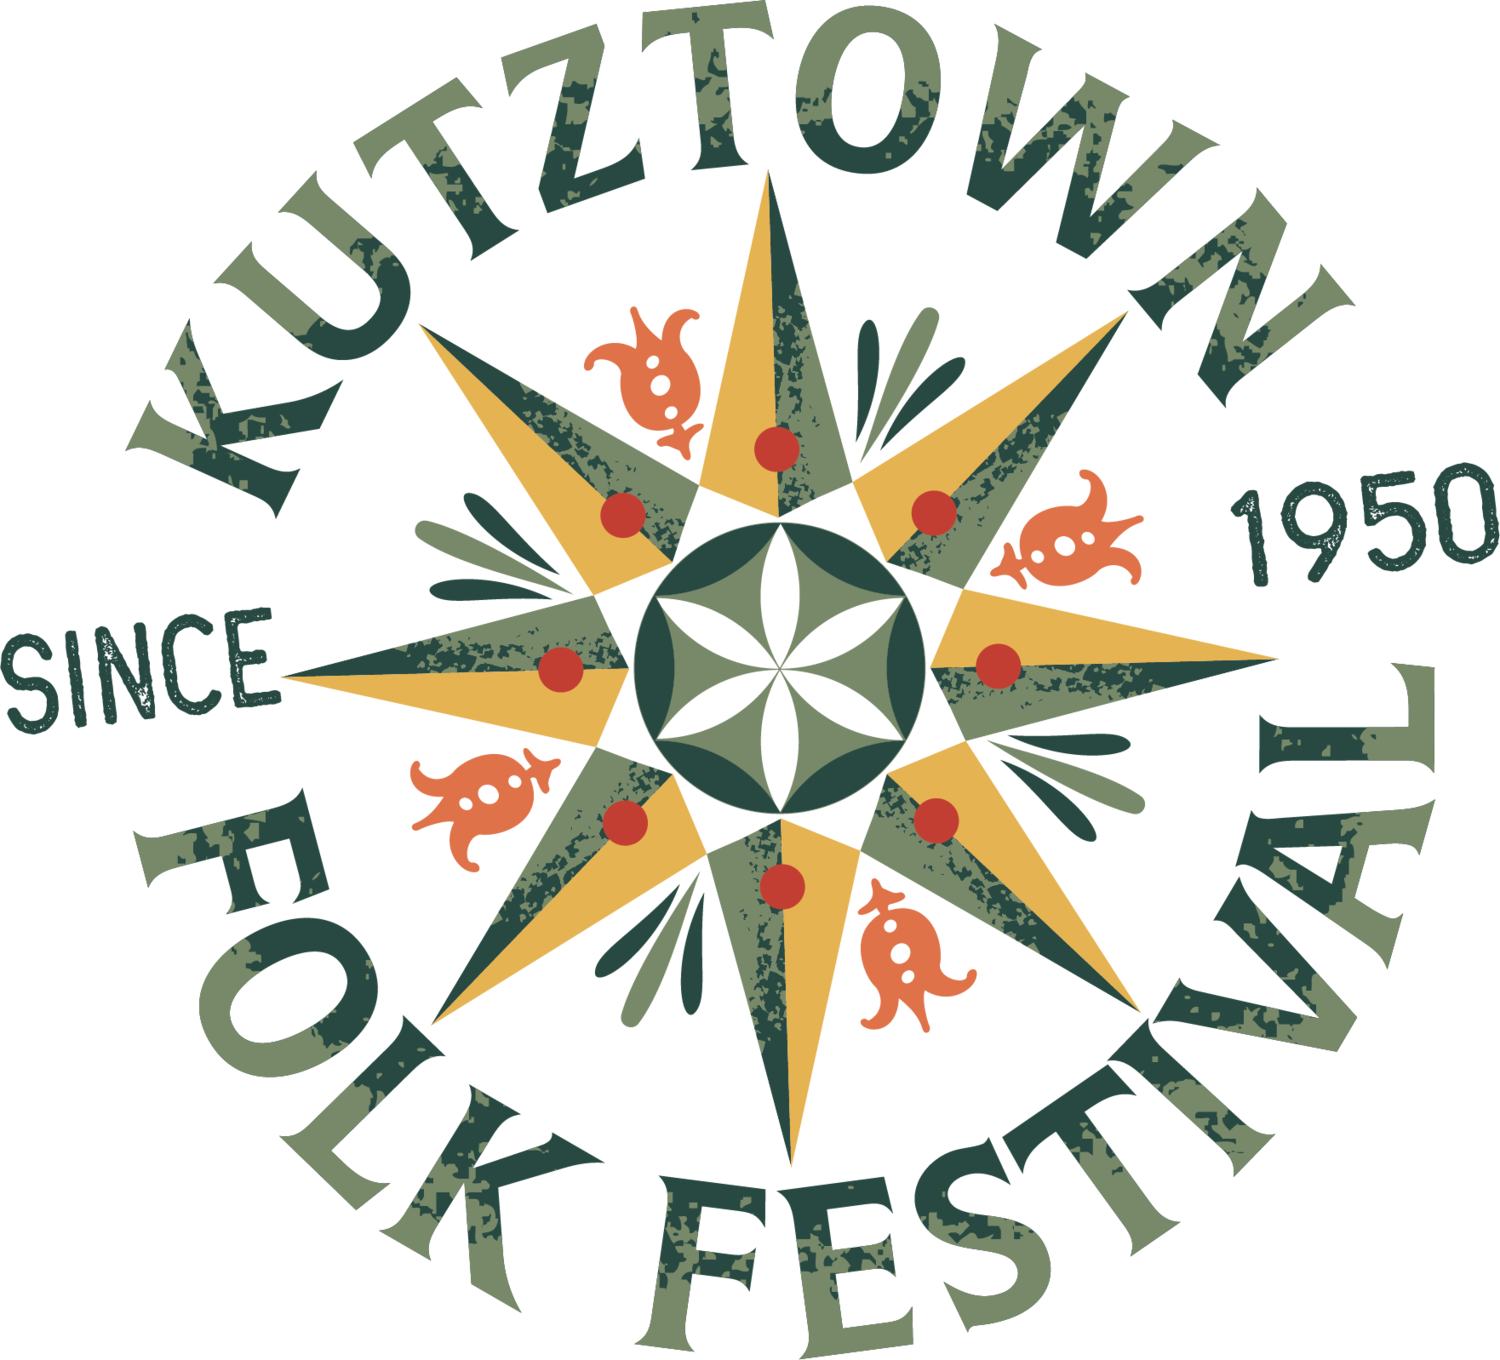 Kutztown Academic Calendar 2022 Kutztown Folk Festival Announces 2022 Dates - Bctv